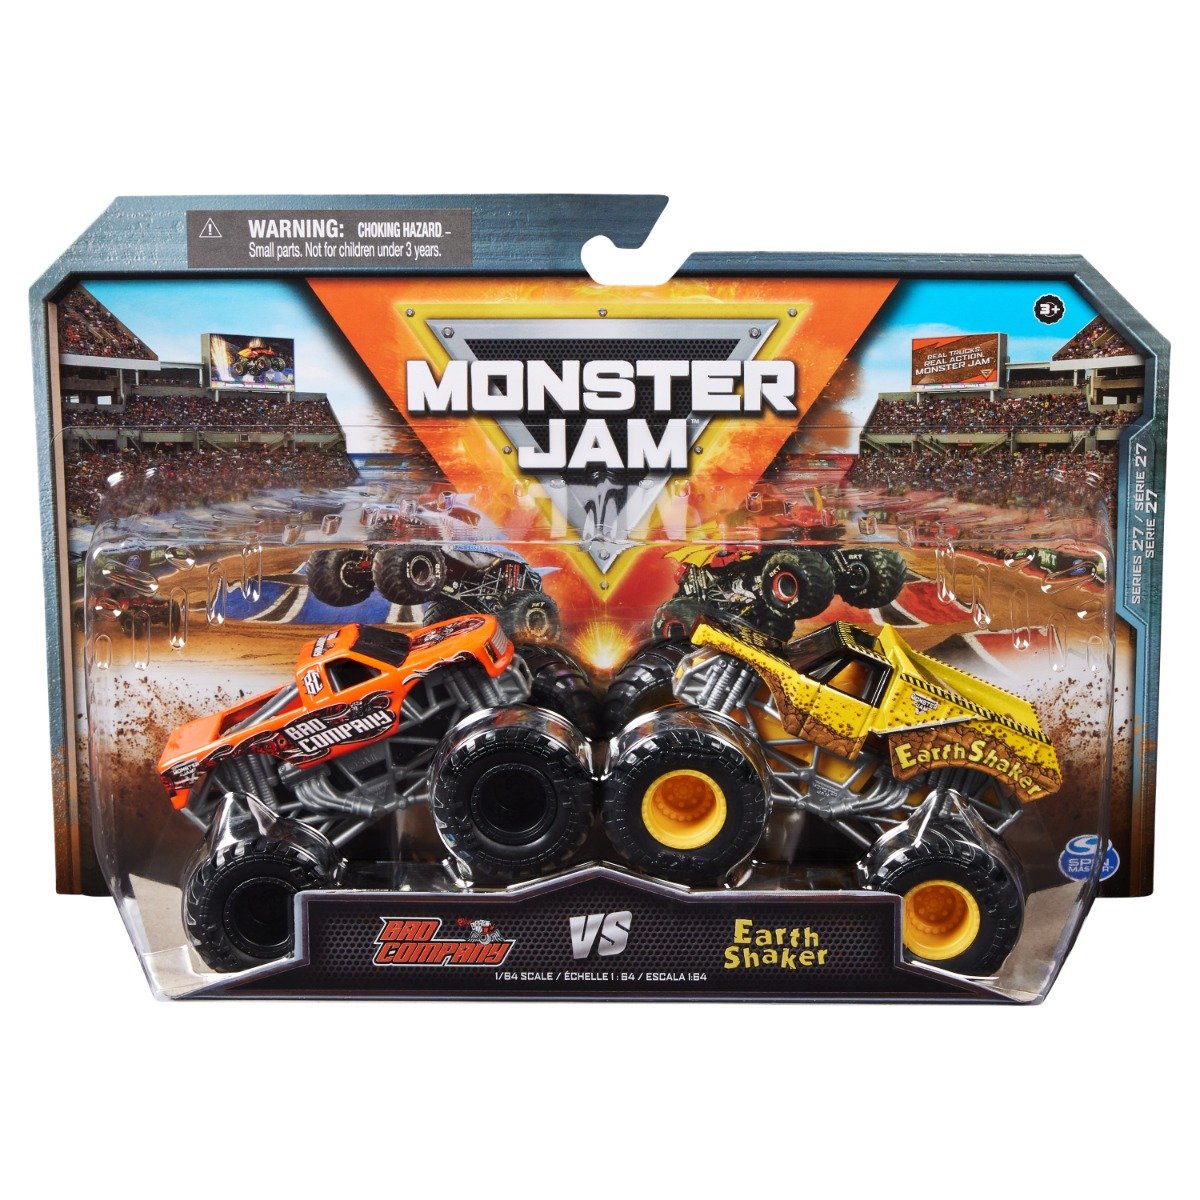 Set 2 masini, Monster Jam, Bad Company Vs Earth Shaker, 1:64, 20144308